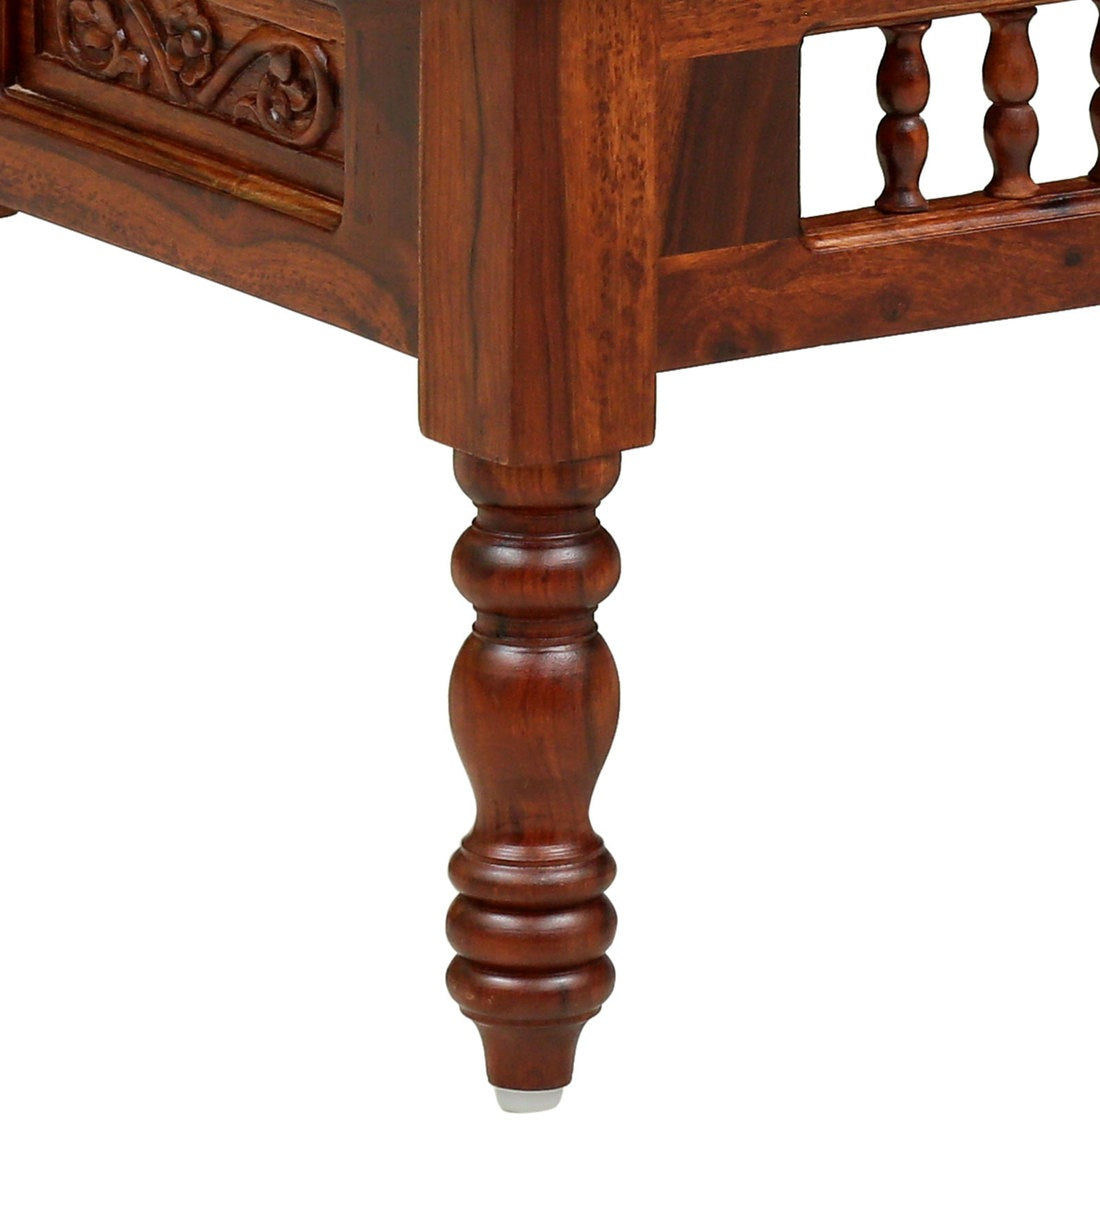 Deventi Solid Wood Coffee Table for Living Room In Honey Oak Finish - Rajwada Furnish